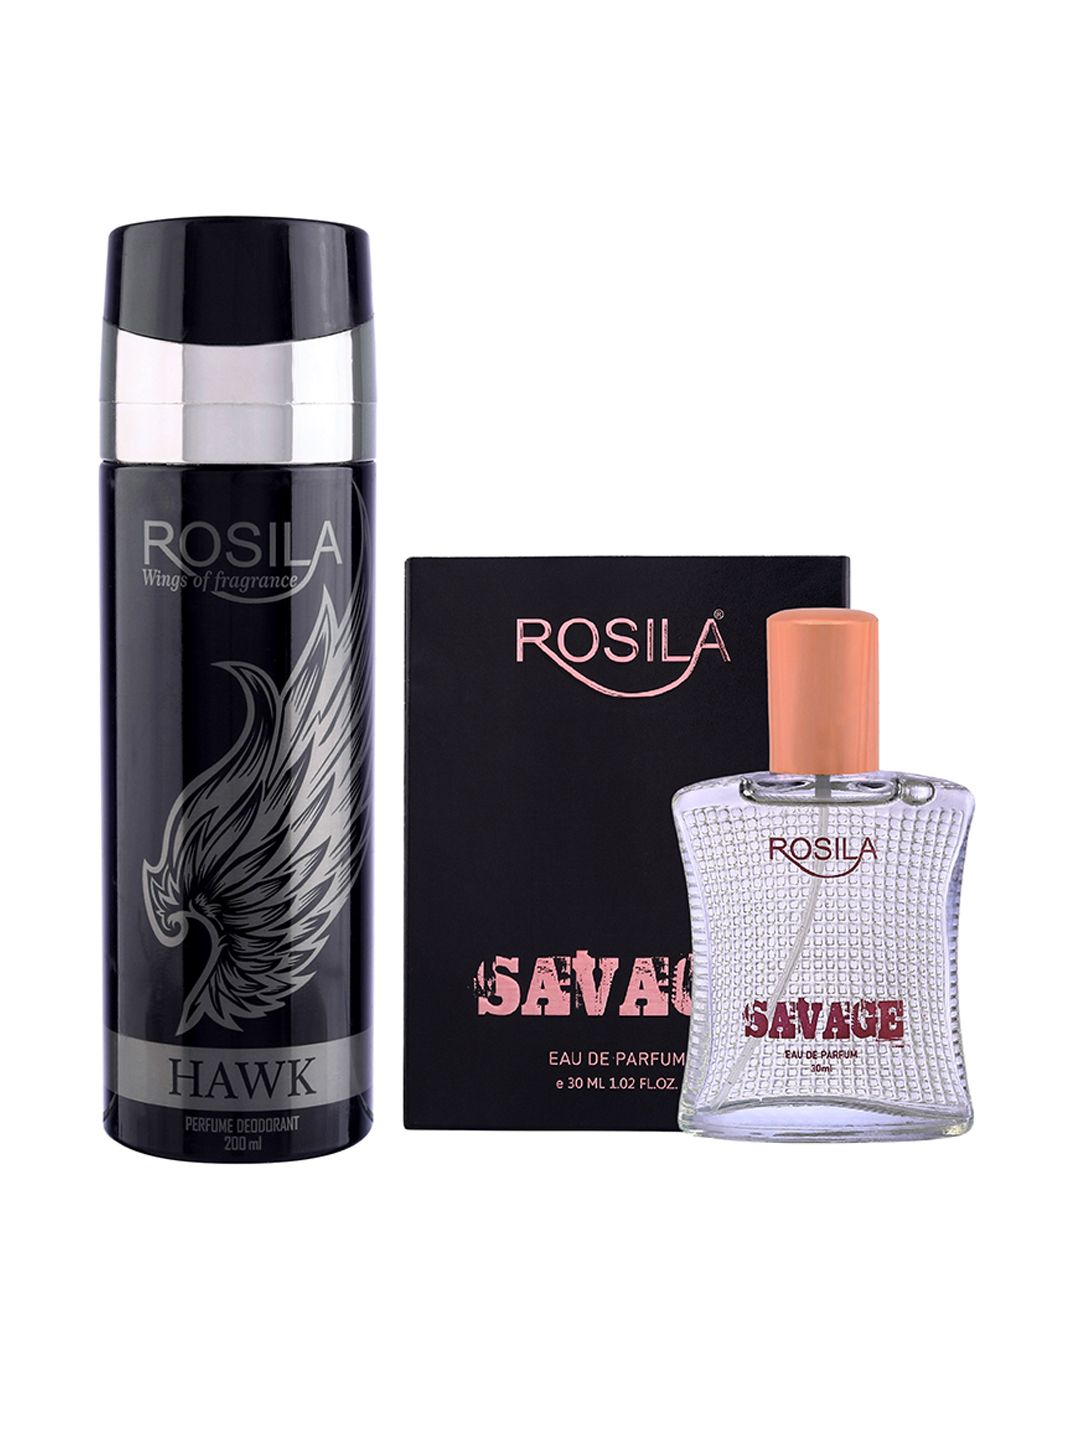 ROSILA Set of Hawk Deodorant Body Spray 200ml & Savage Eau de Parfum 30ml Price in India